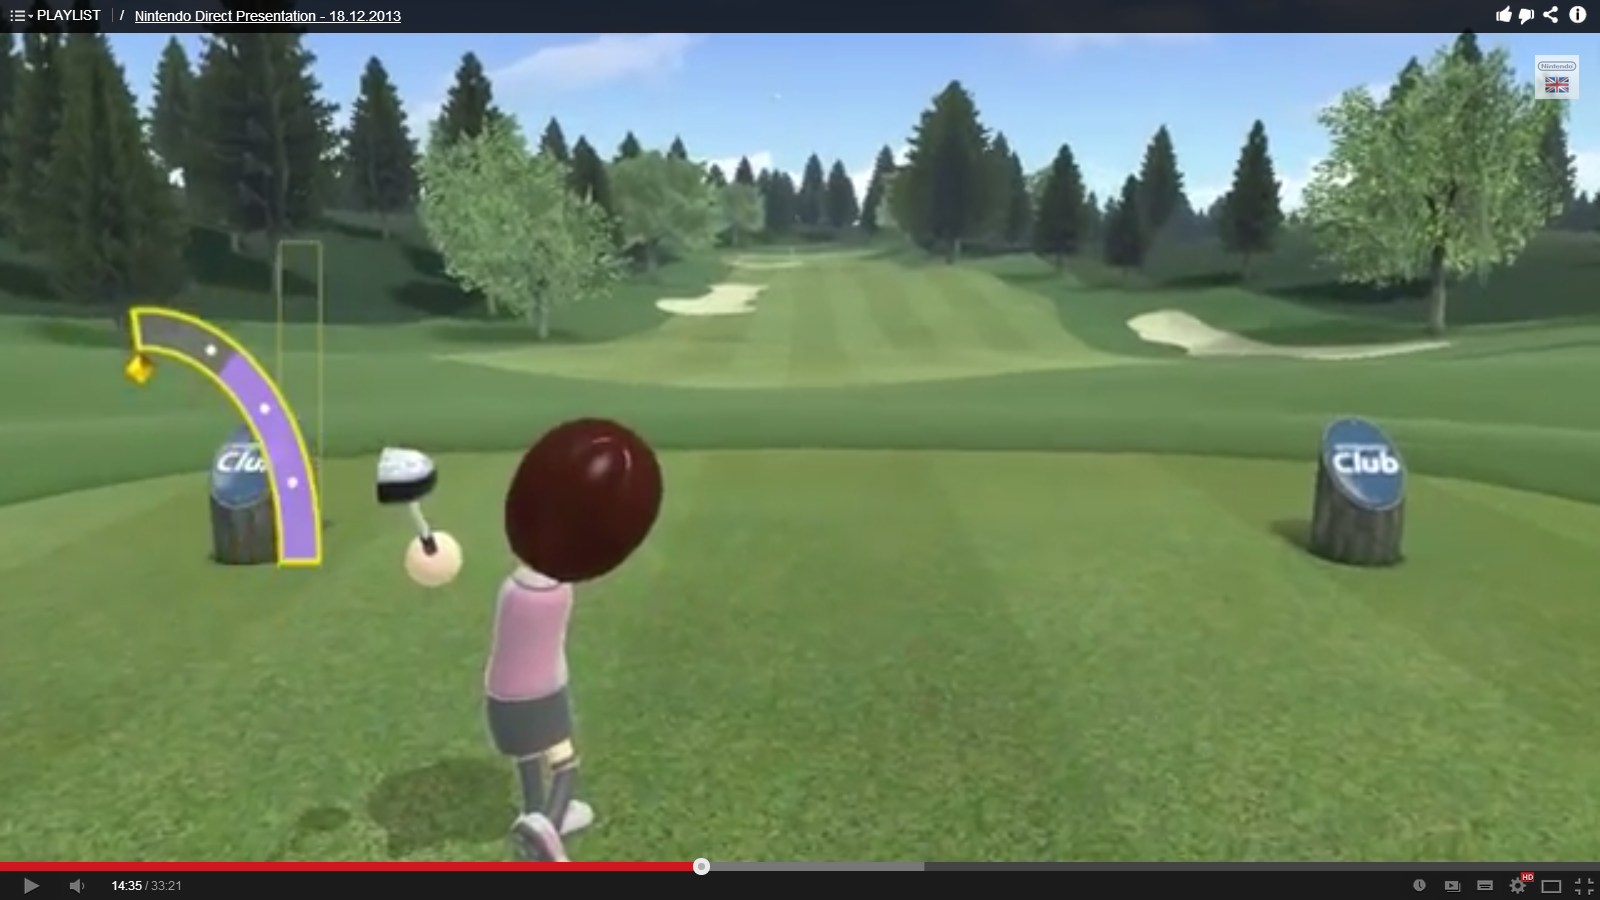 Wii Sports Club adds Resort golf course